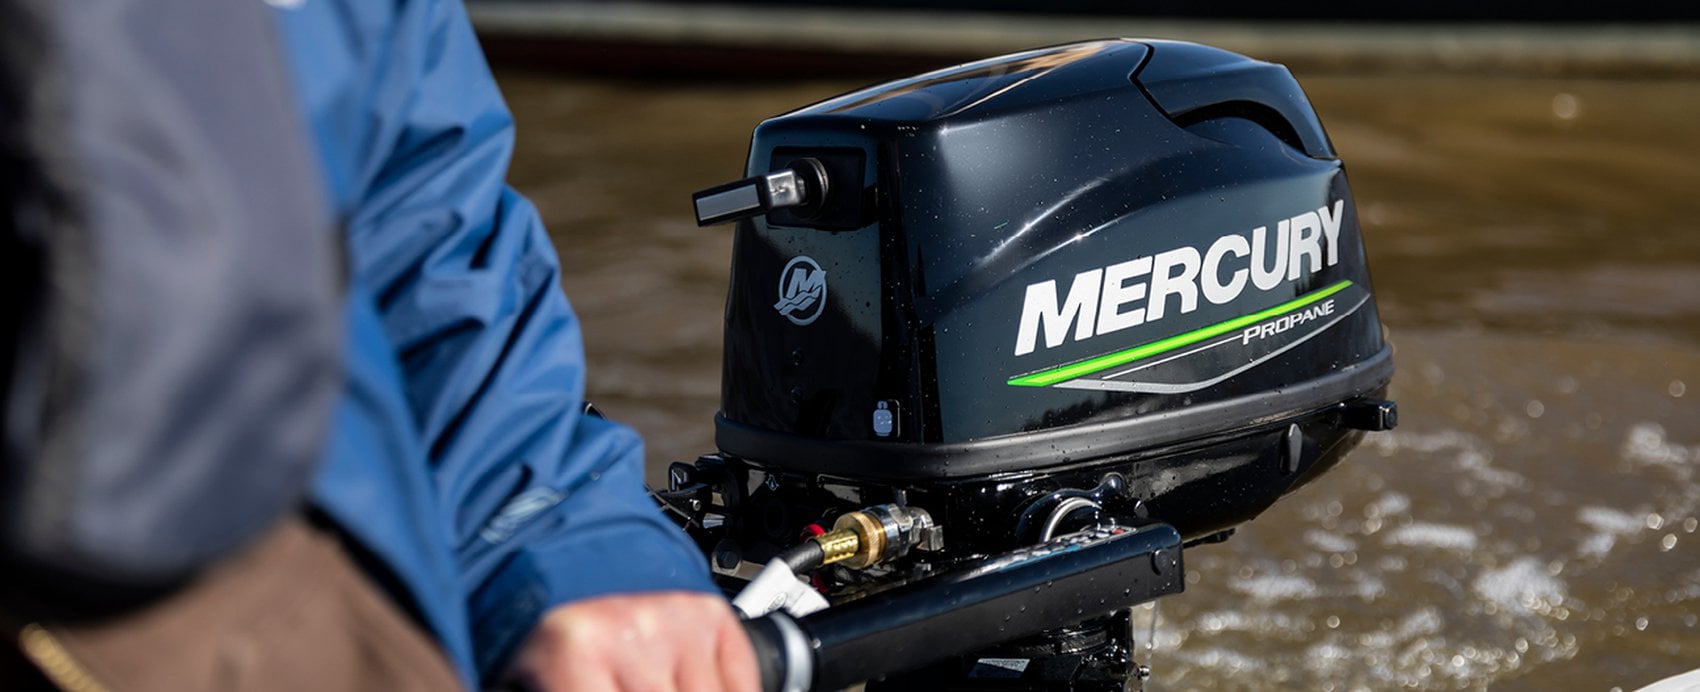 Mercury Outboard Motor